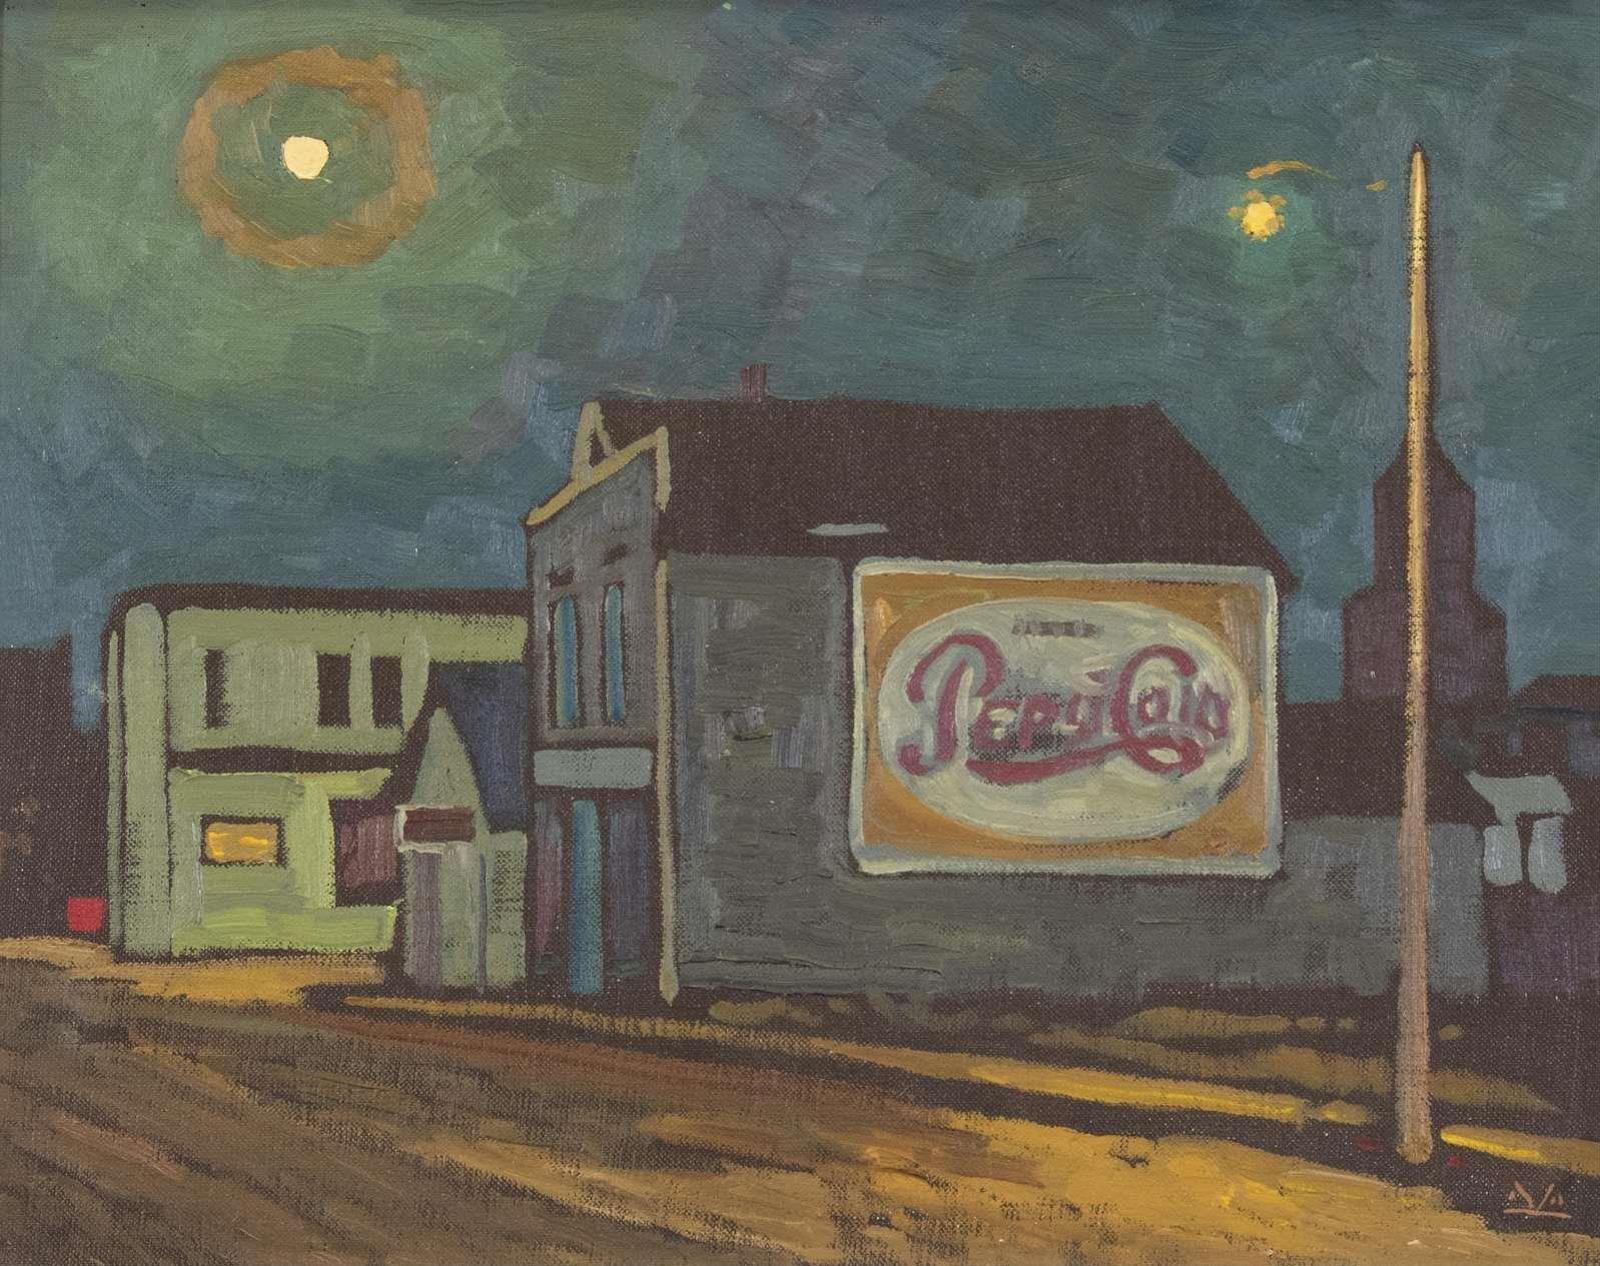 Illingworth Holey (Buck) Kerr (1905-1989) - Pepsi Moon; 1981